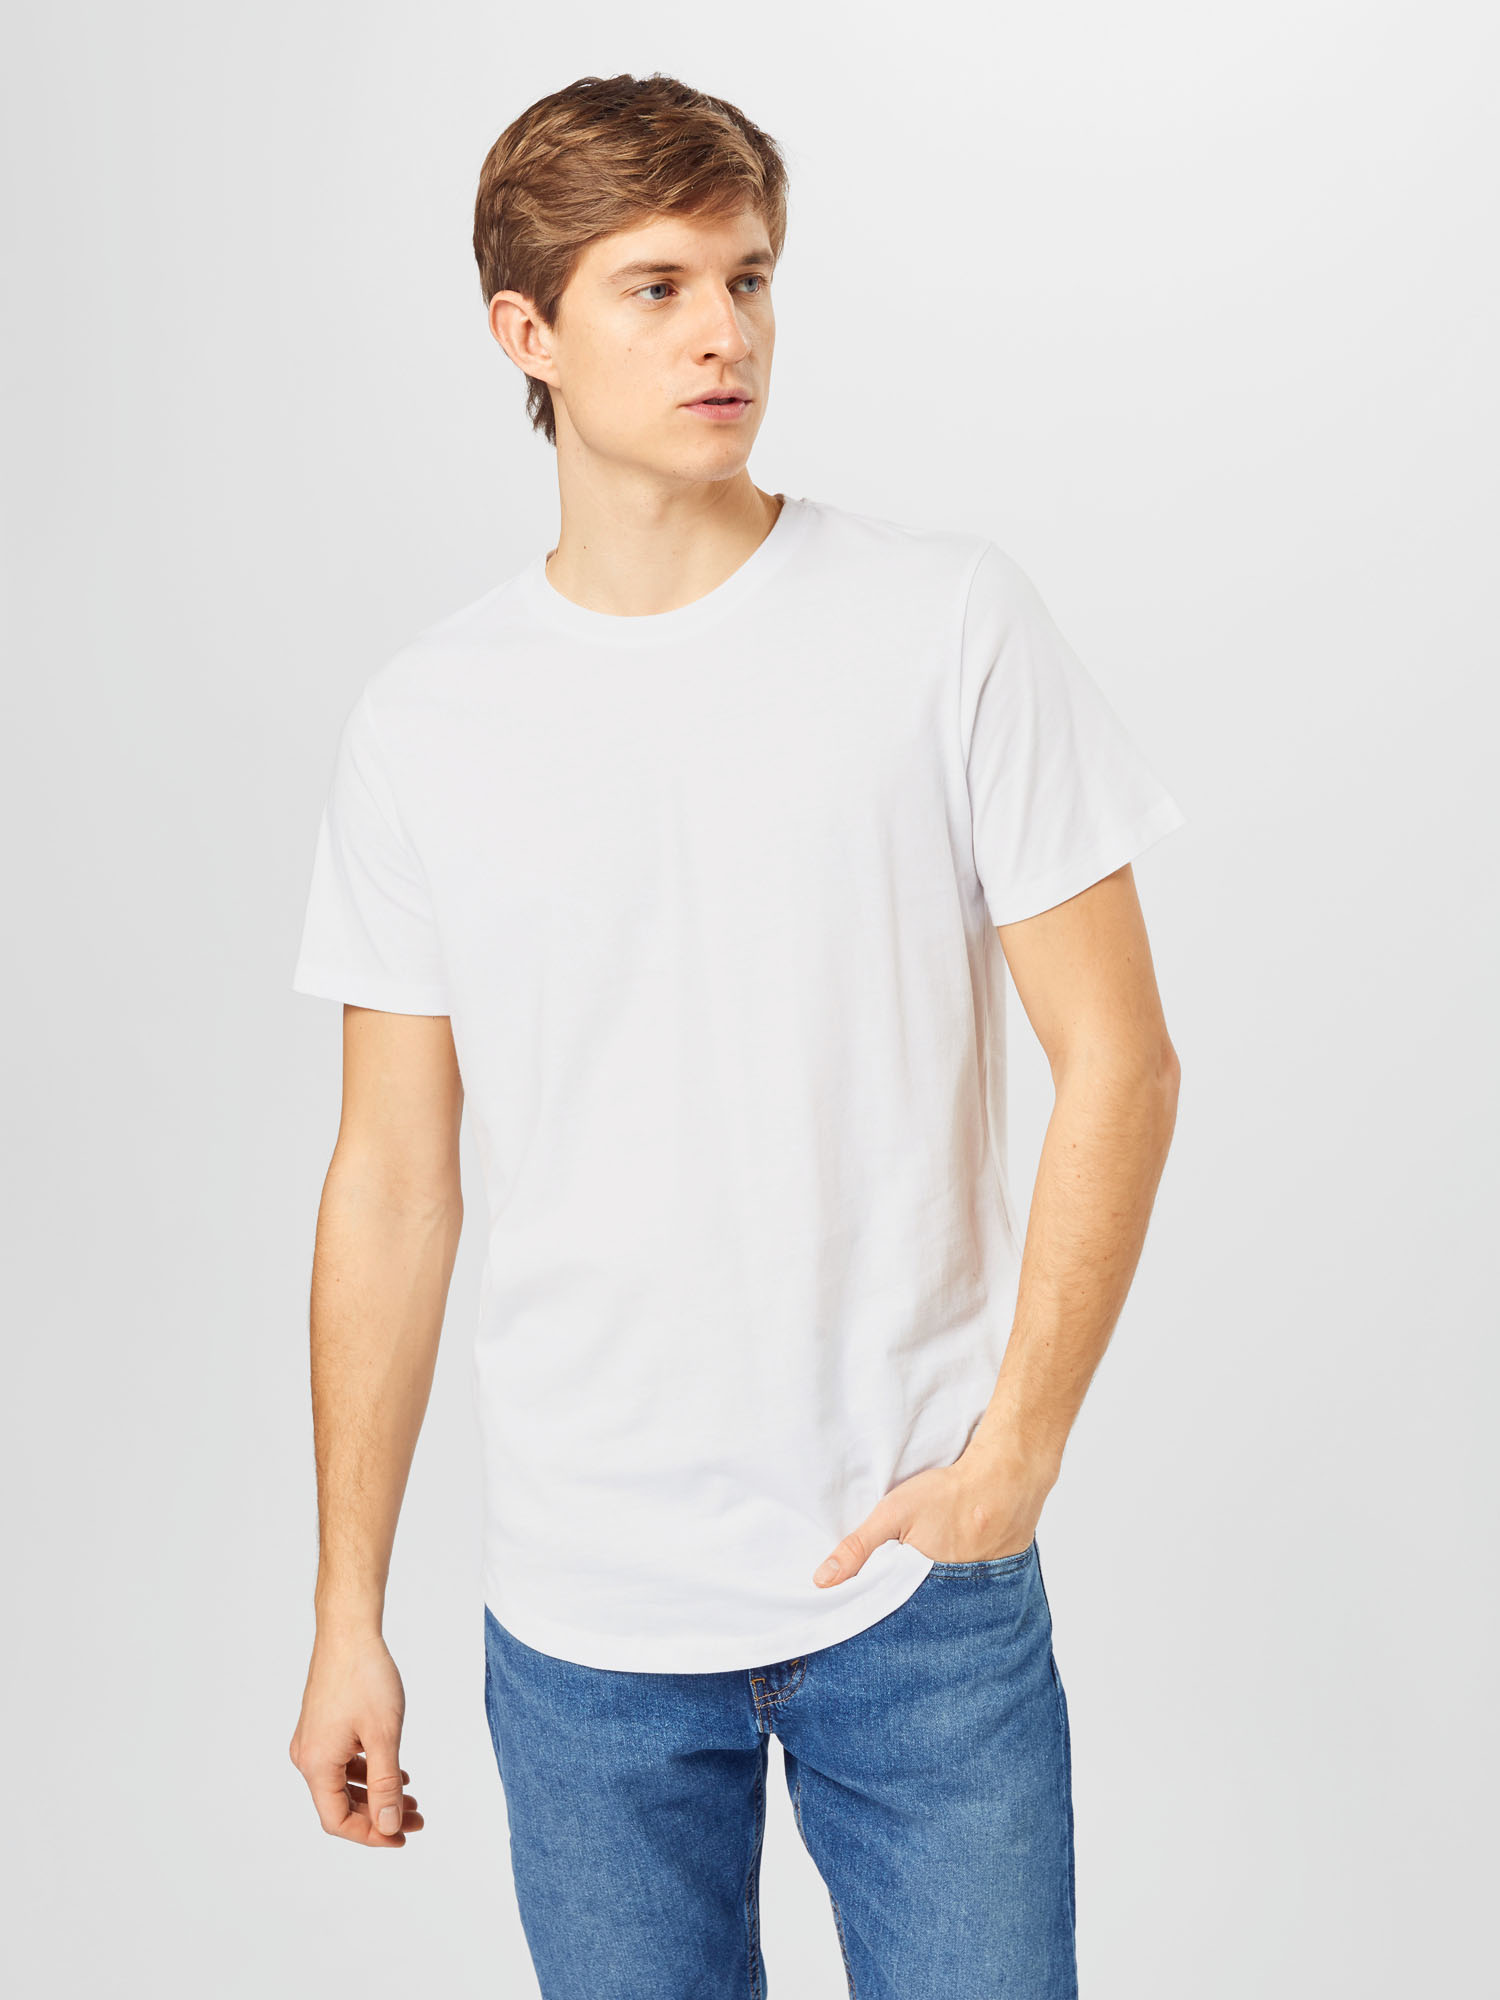 Koszulki HEbQd JACK & JONES Koszulka ENOA w kolorze Białym 